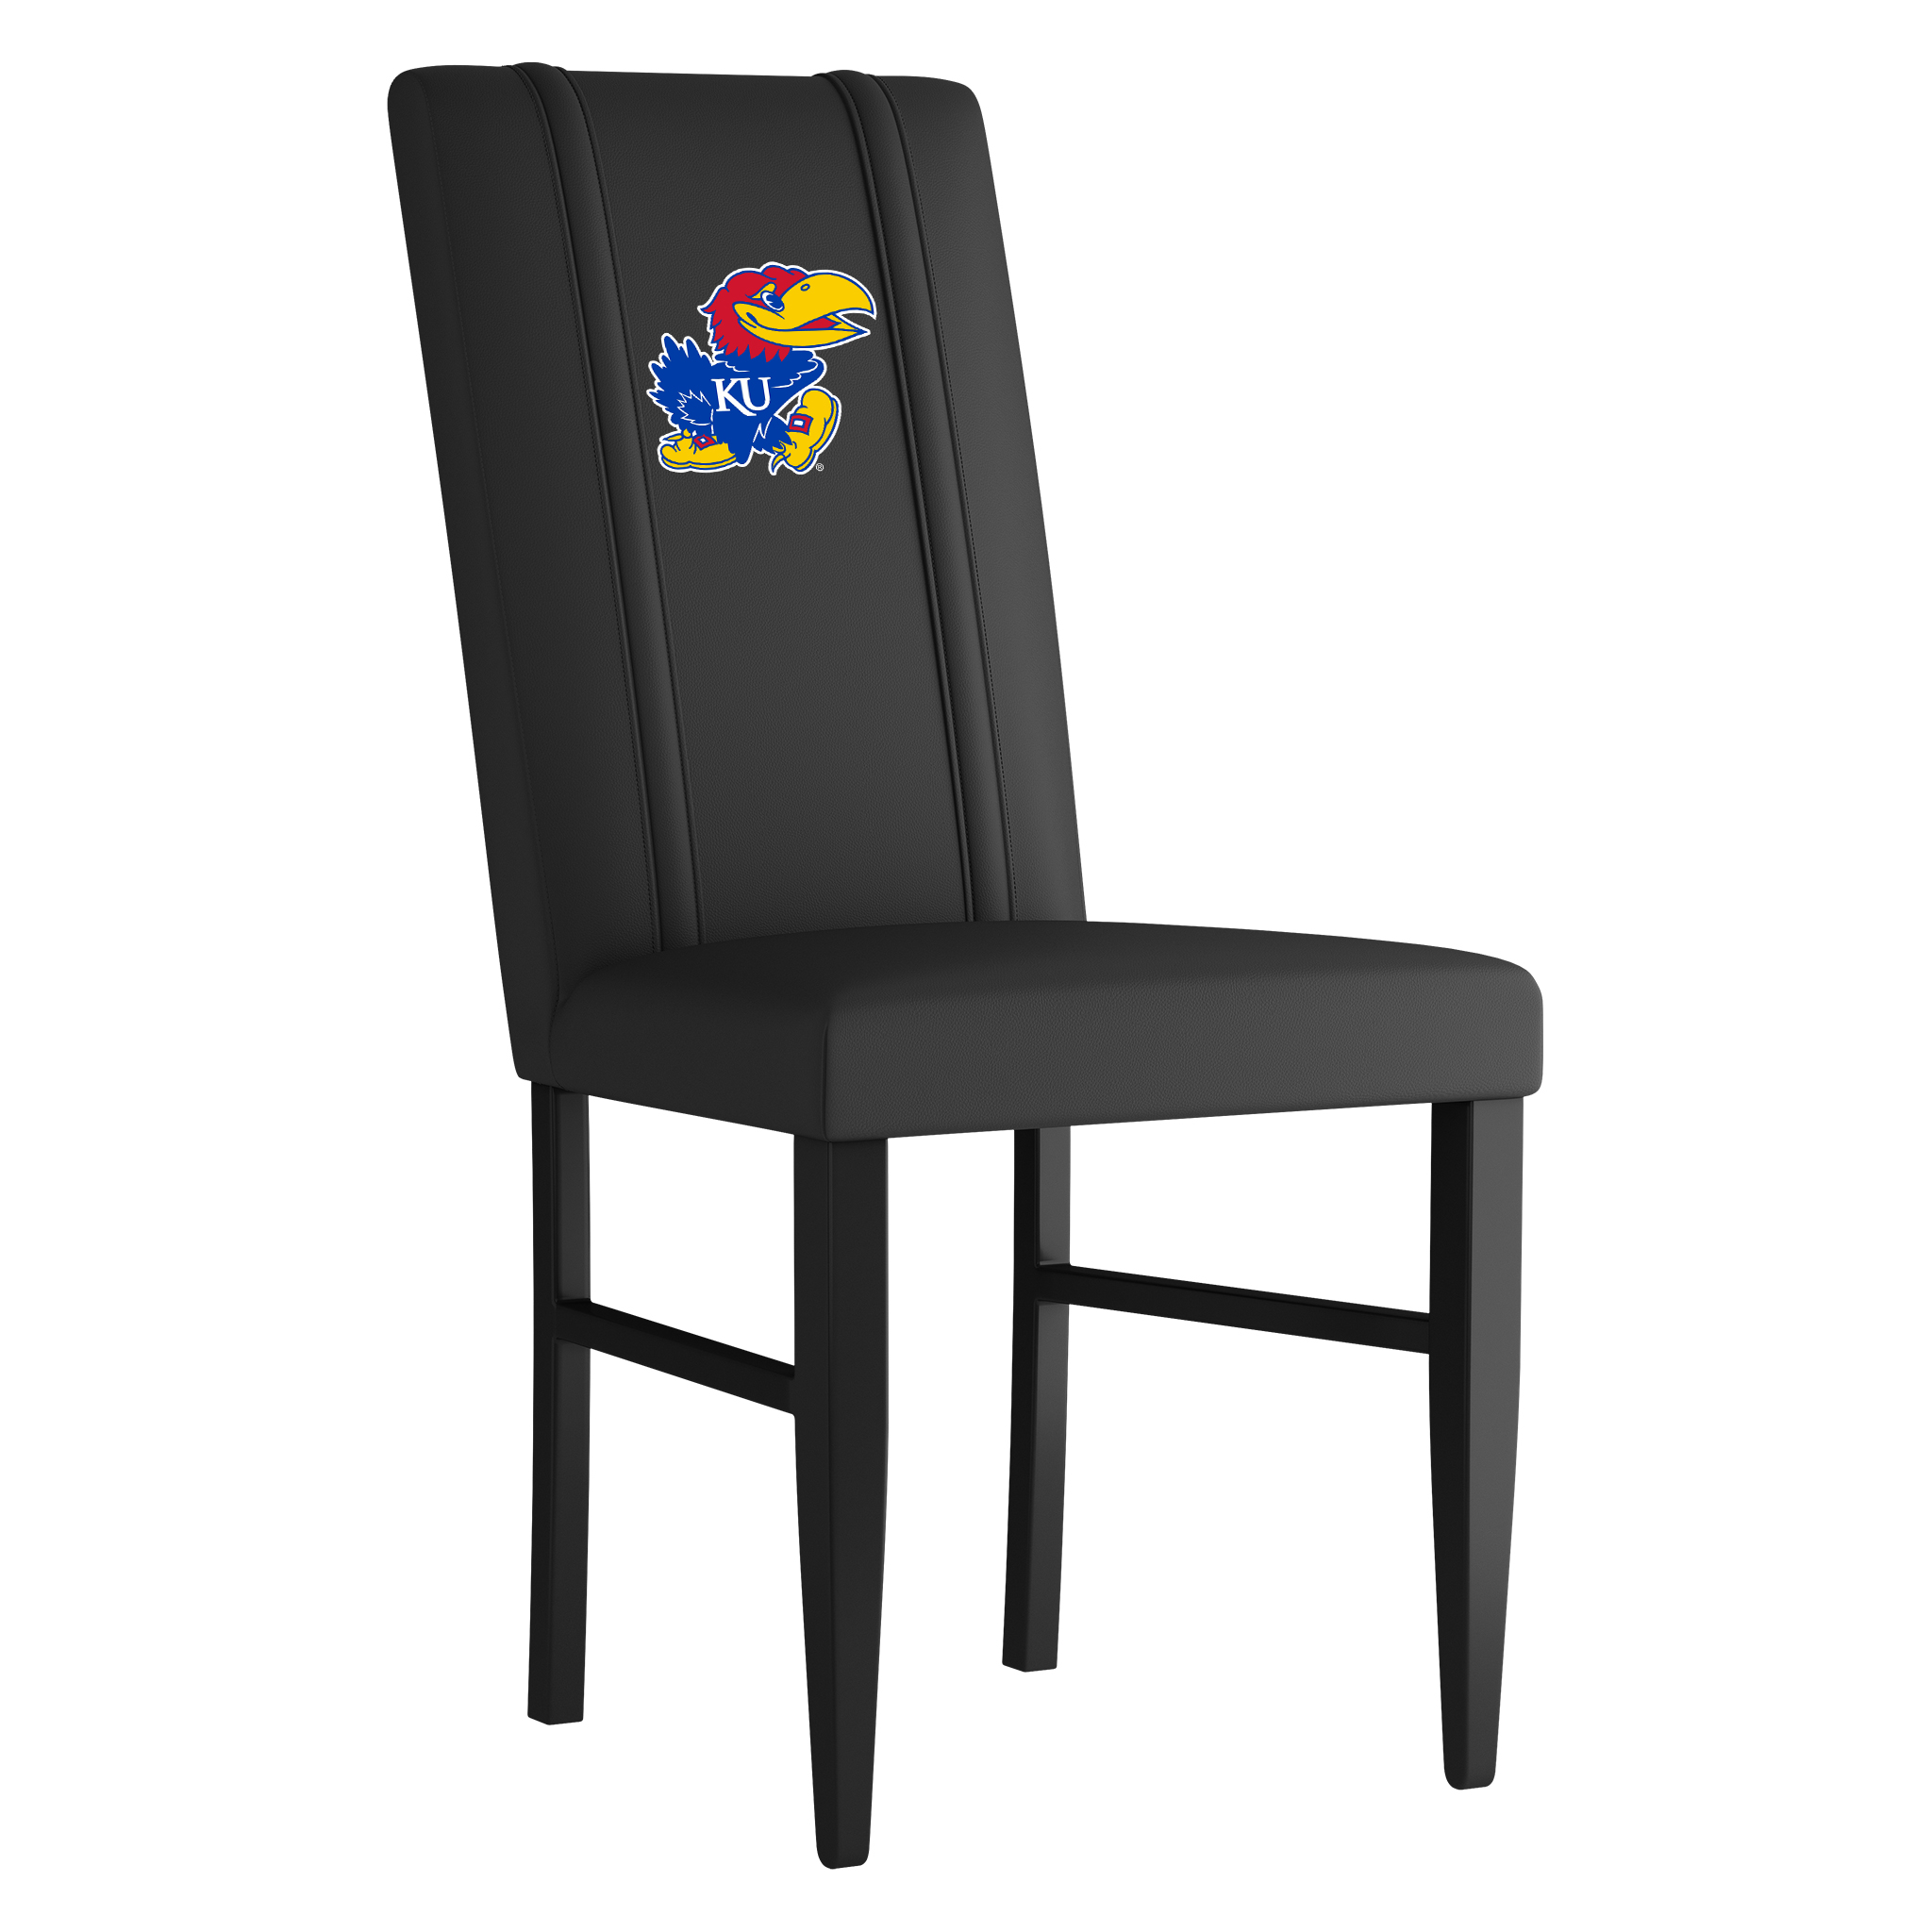 Kansas Jayhawks Side Chair 2000 With Kansas Jayhawks Logo Panel